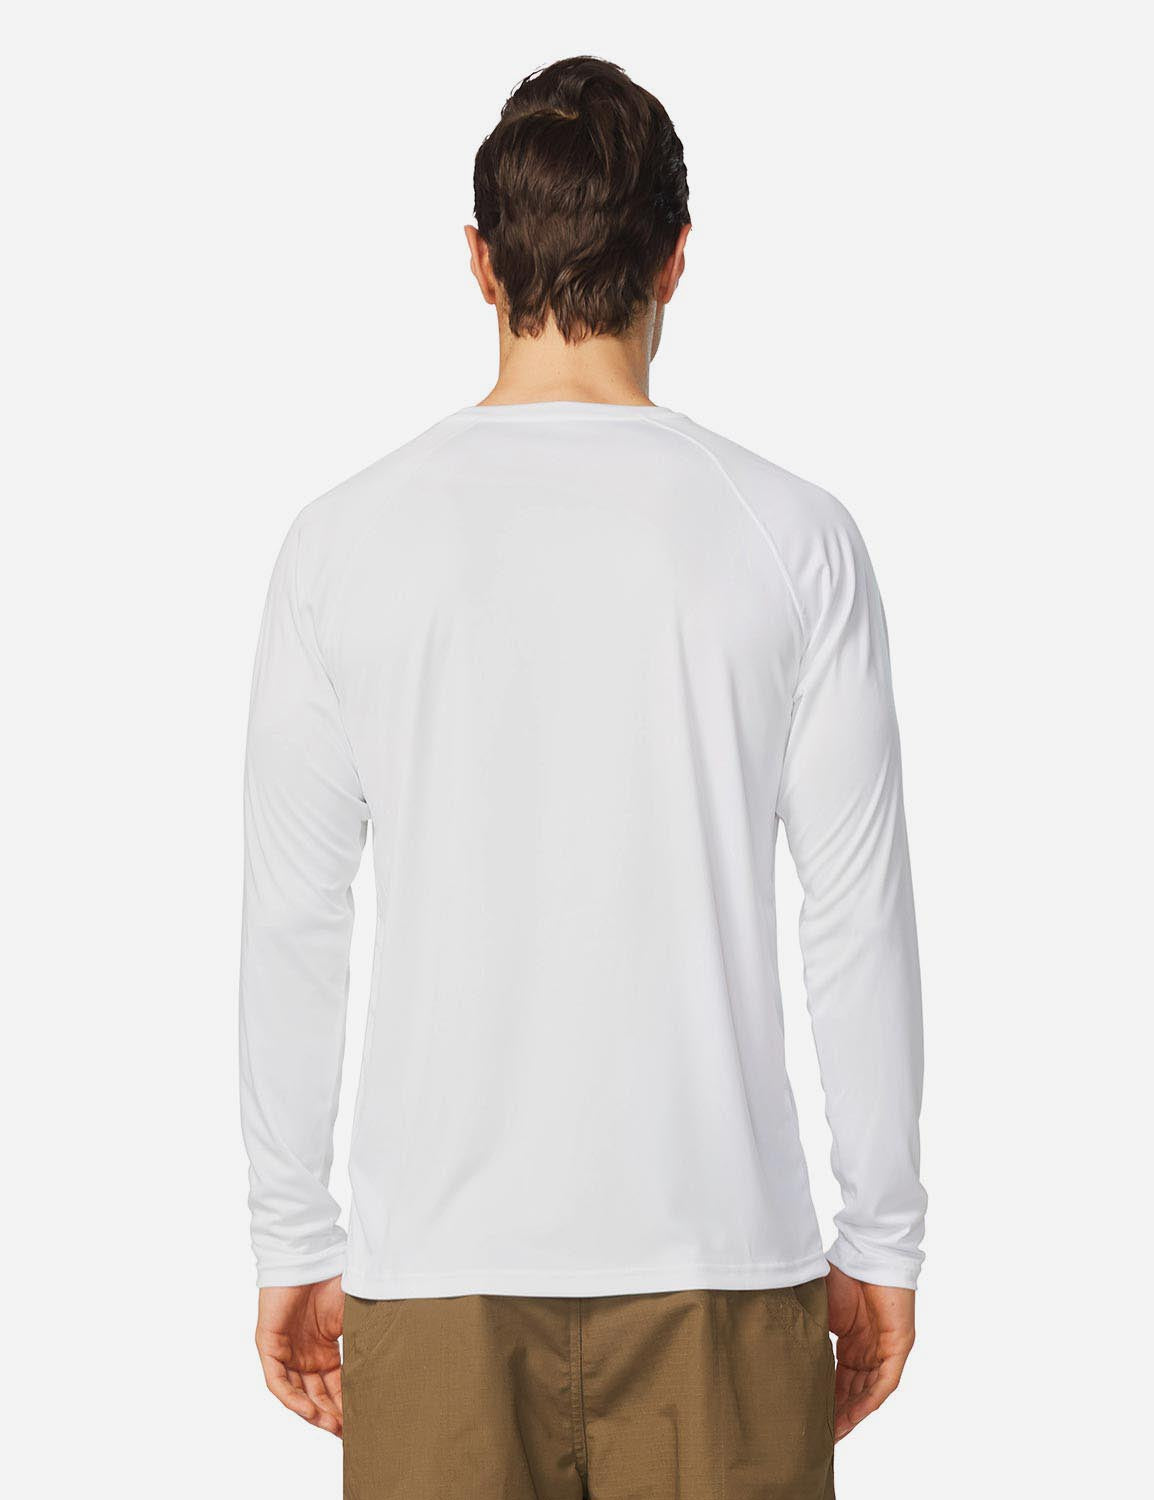 Baleaf Men's UPF50+ Long Sleeved Loose Fit Casual T-Shirt aga002 White Back